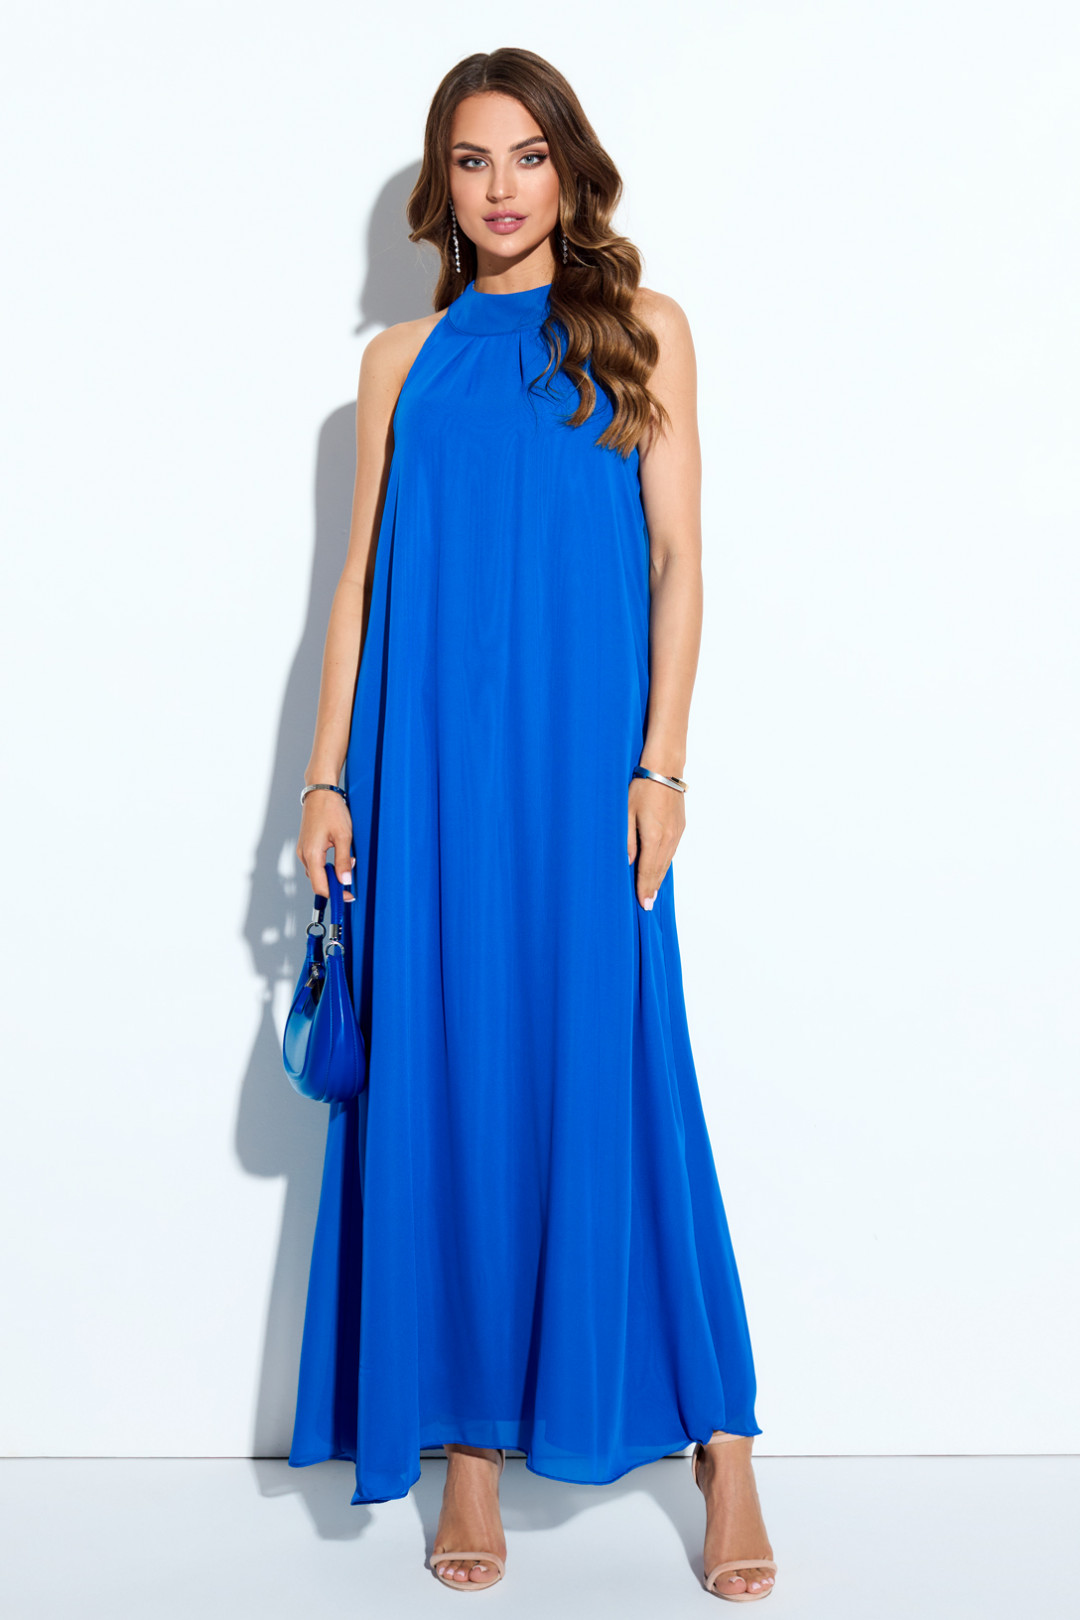 Платье TEZA 4131 синий